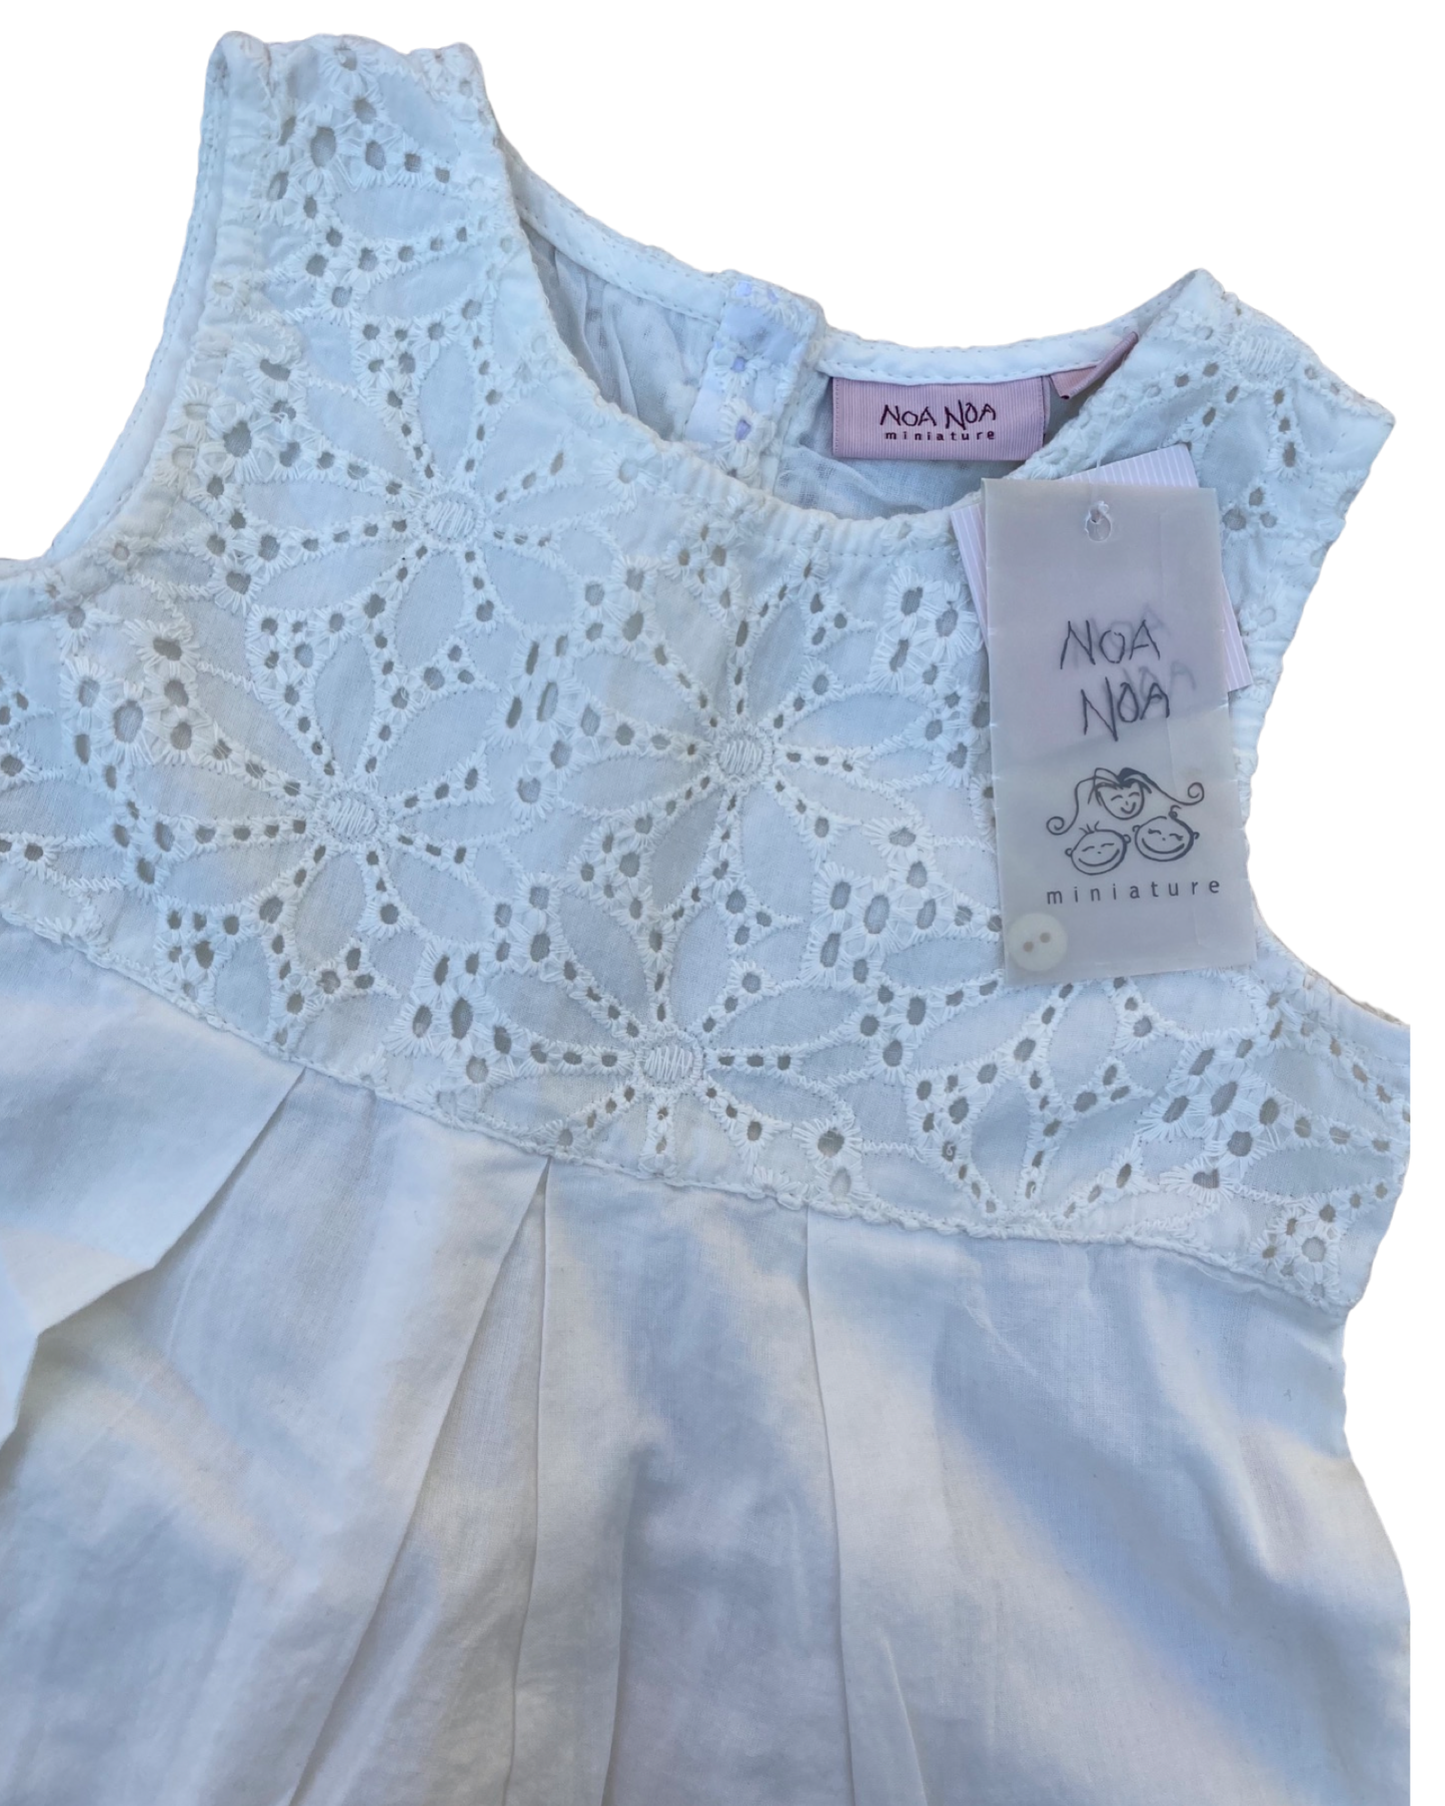 Noa Noa minature cream cotton baby dress (6-9mths)